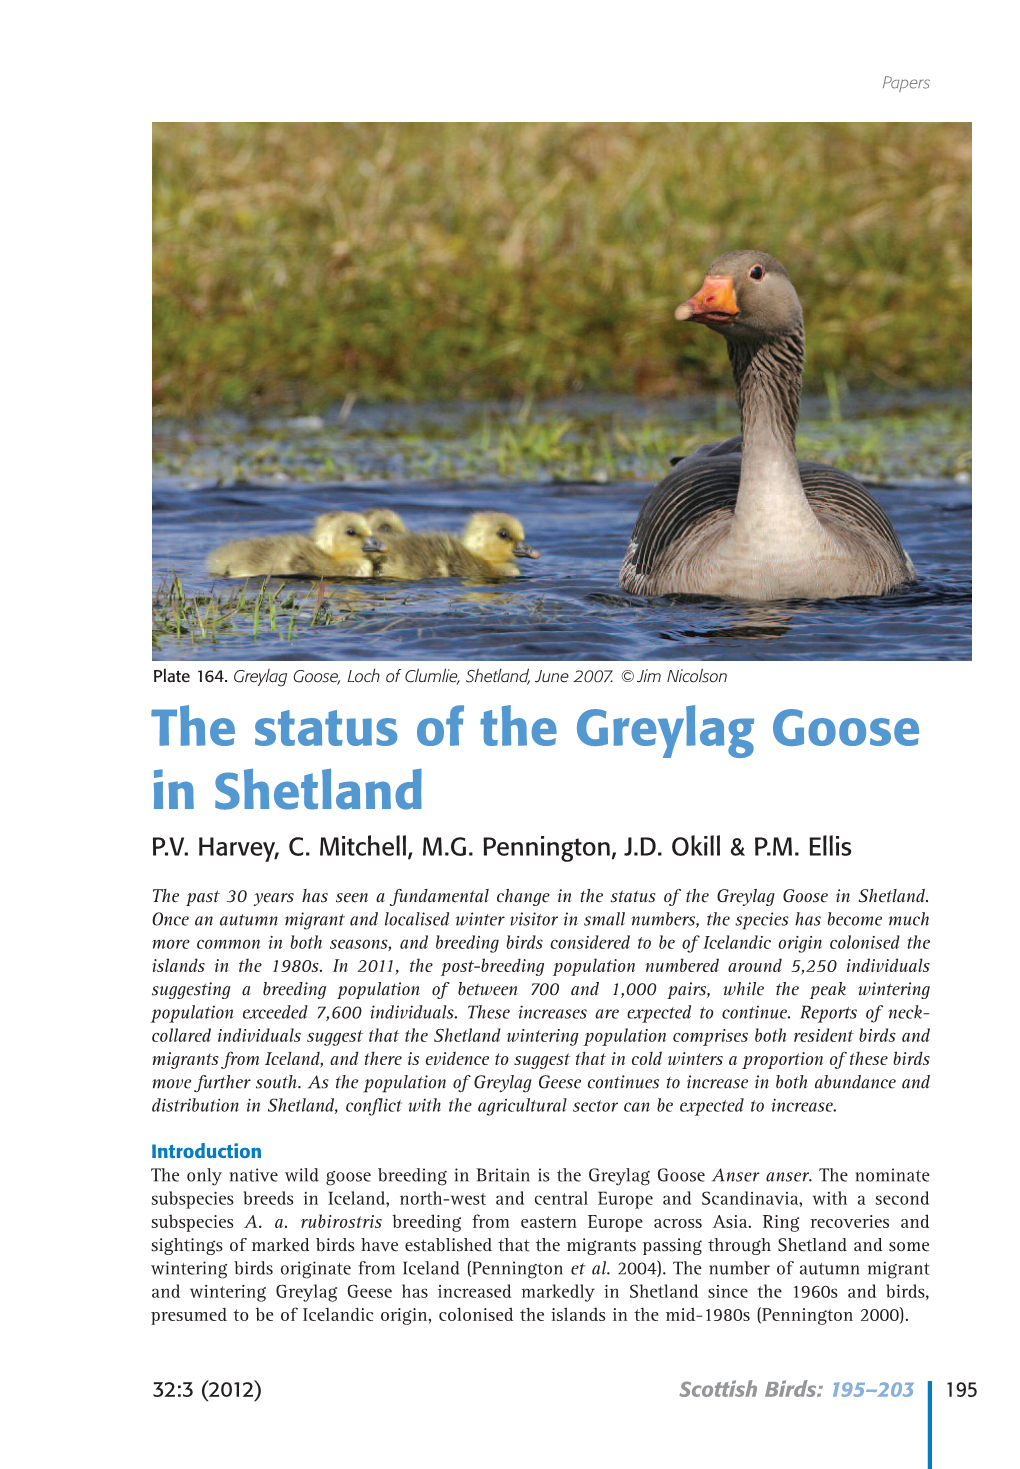 The Status of the Greylag Goose in Shetland P.V